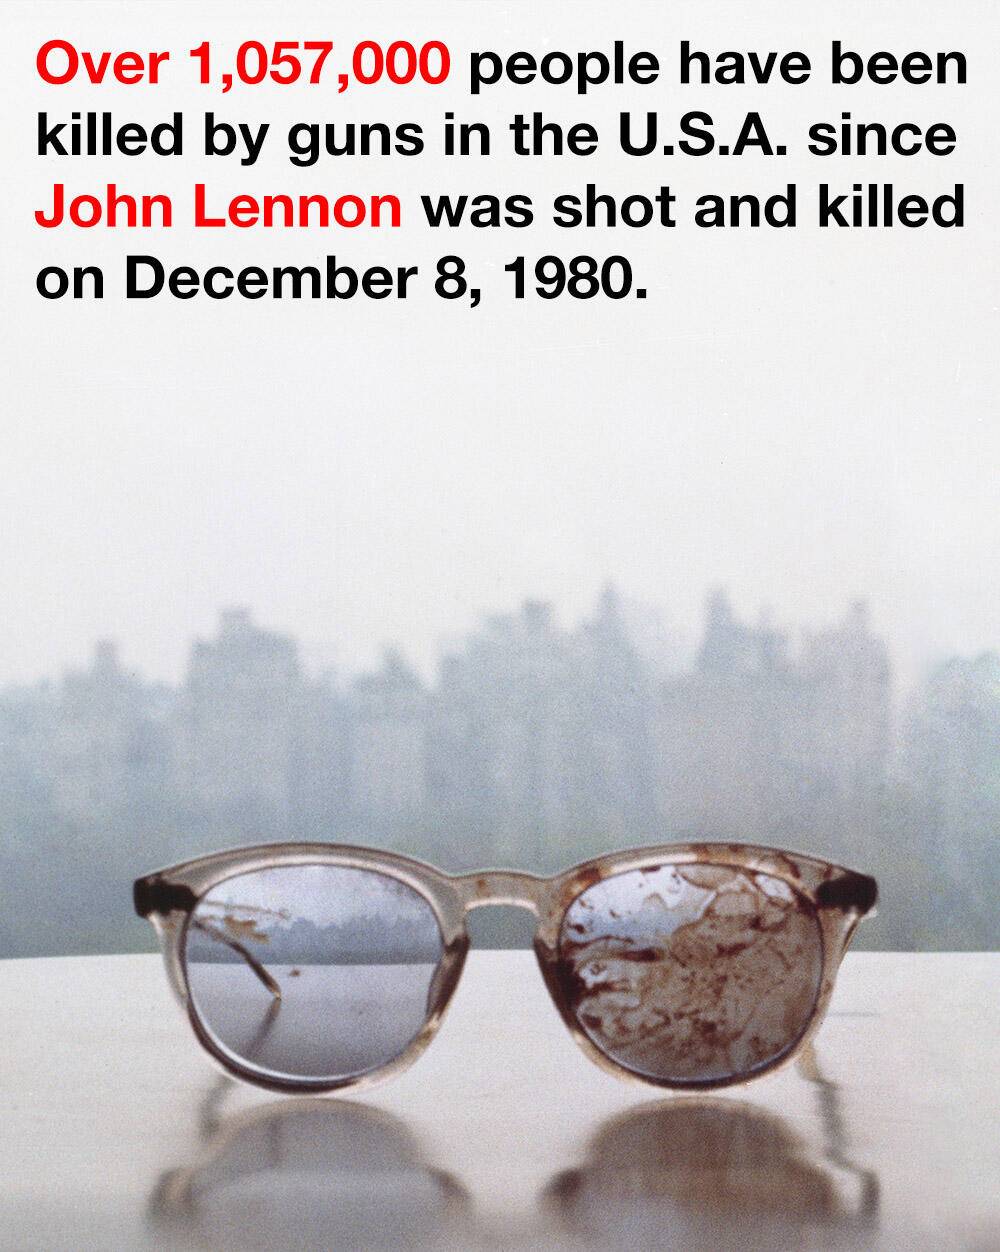 Obama Retweets Photo of John Lennon’s Bloody Glasses